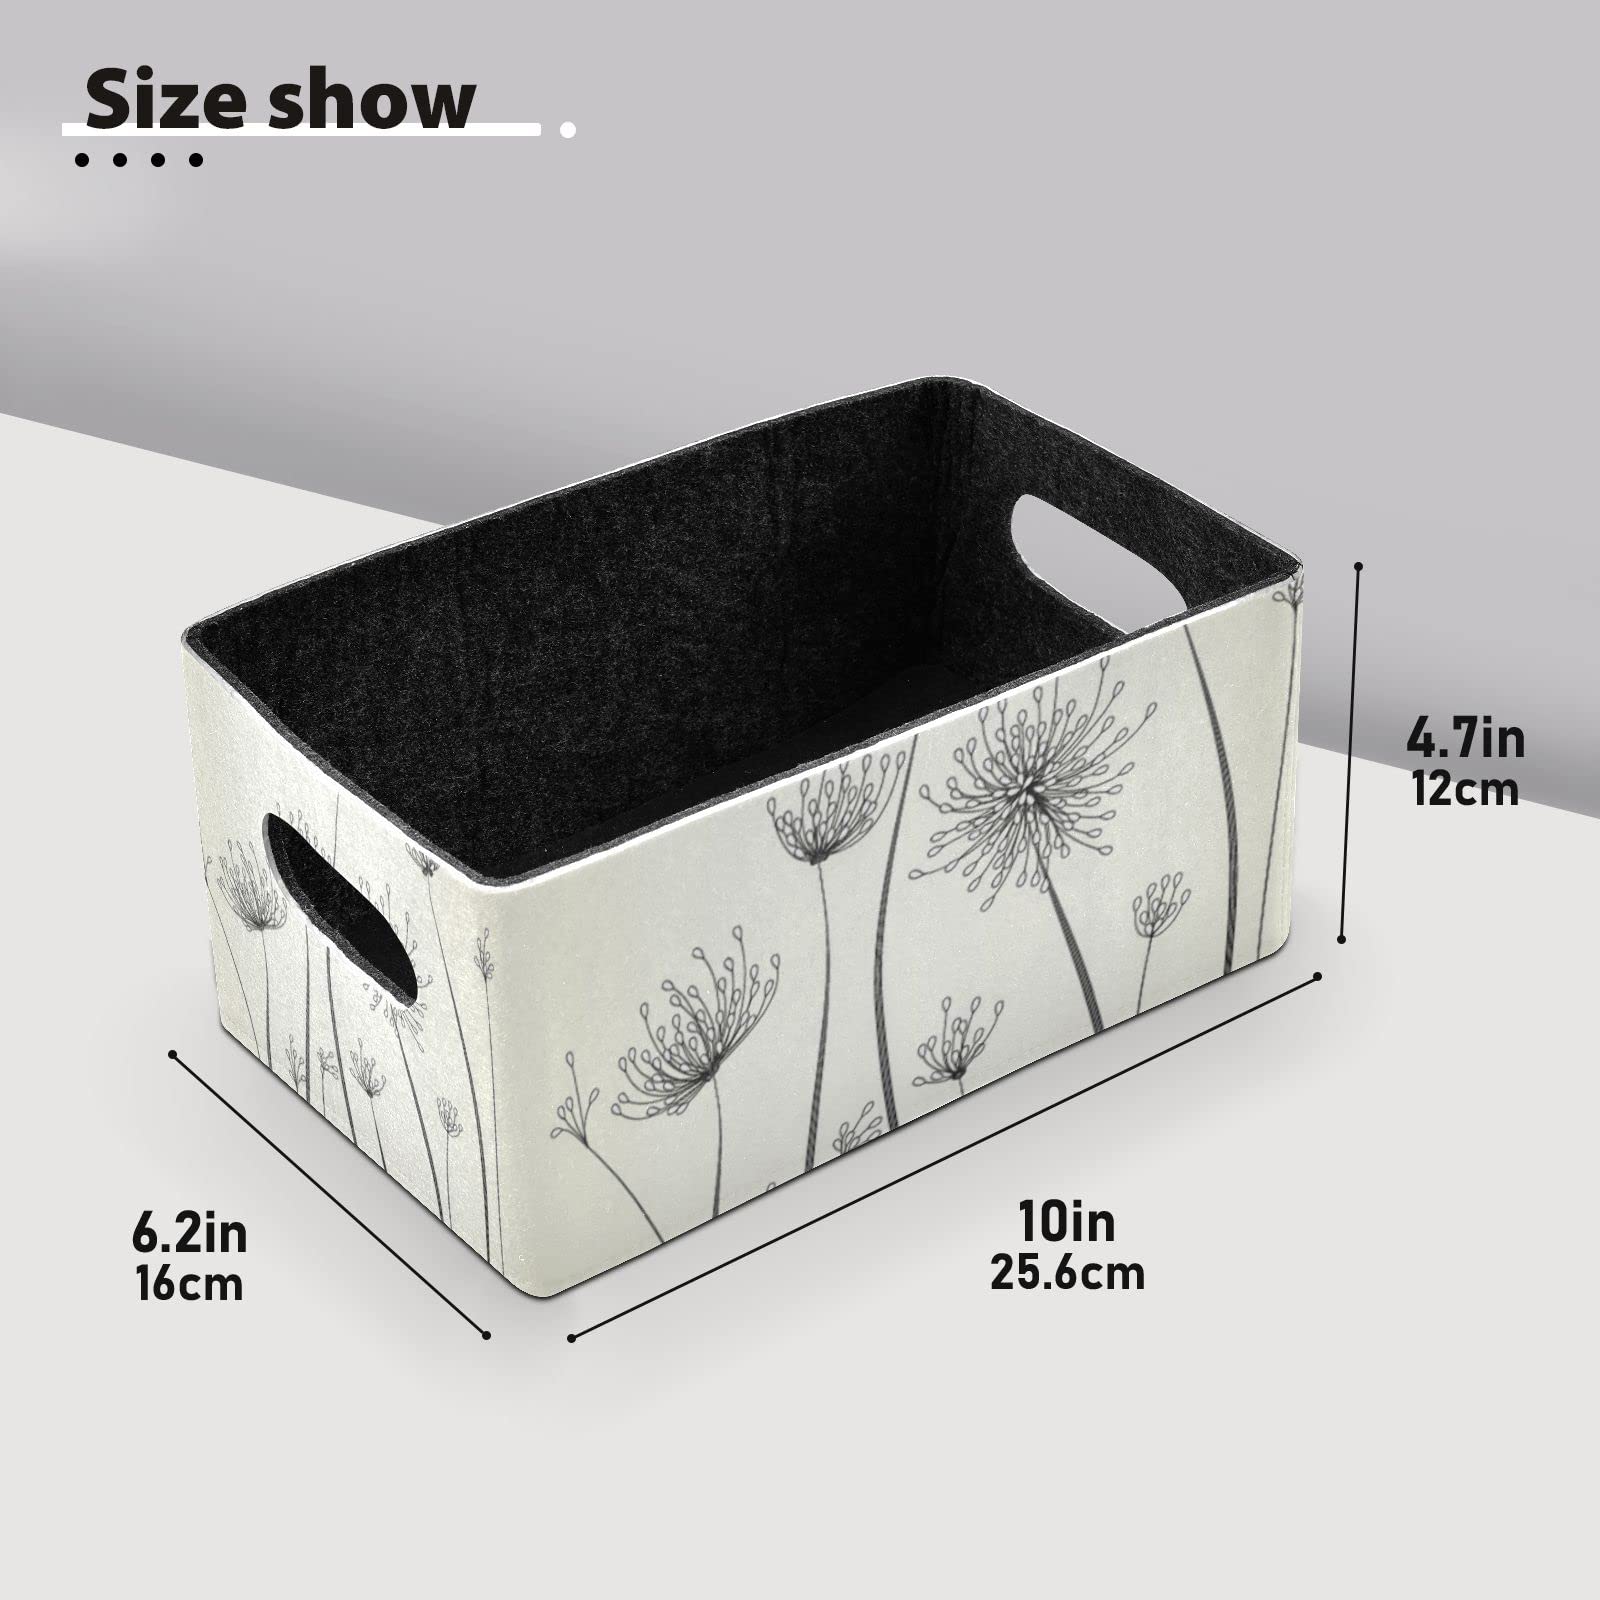 Kcldeci Dandelion Floral Home Foldable Collapsible Storage Box Bins Shelf Basket Cube Organizer Set of 2